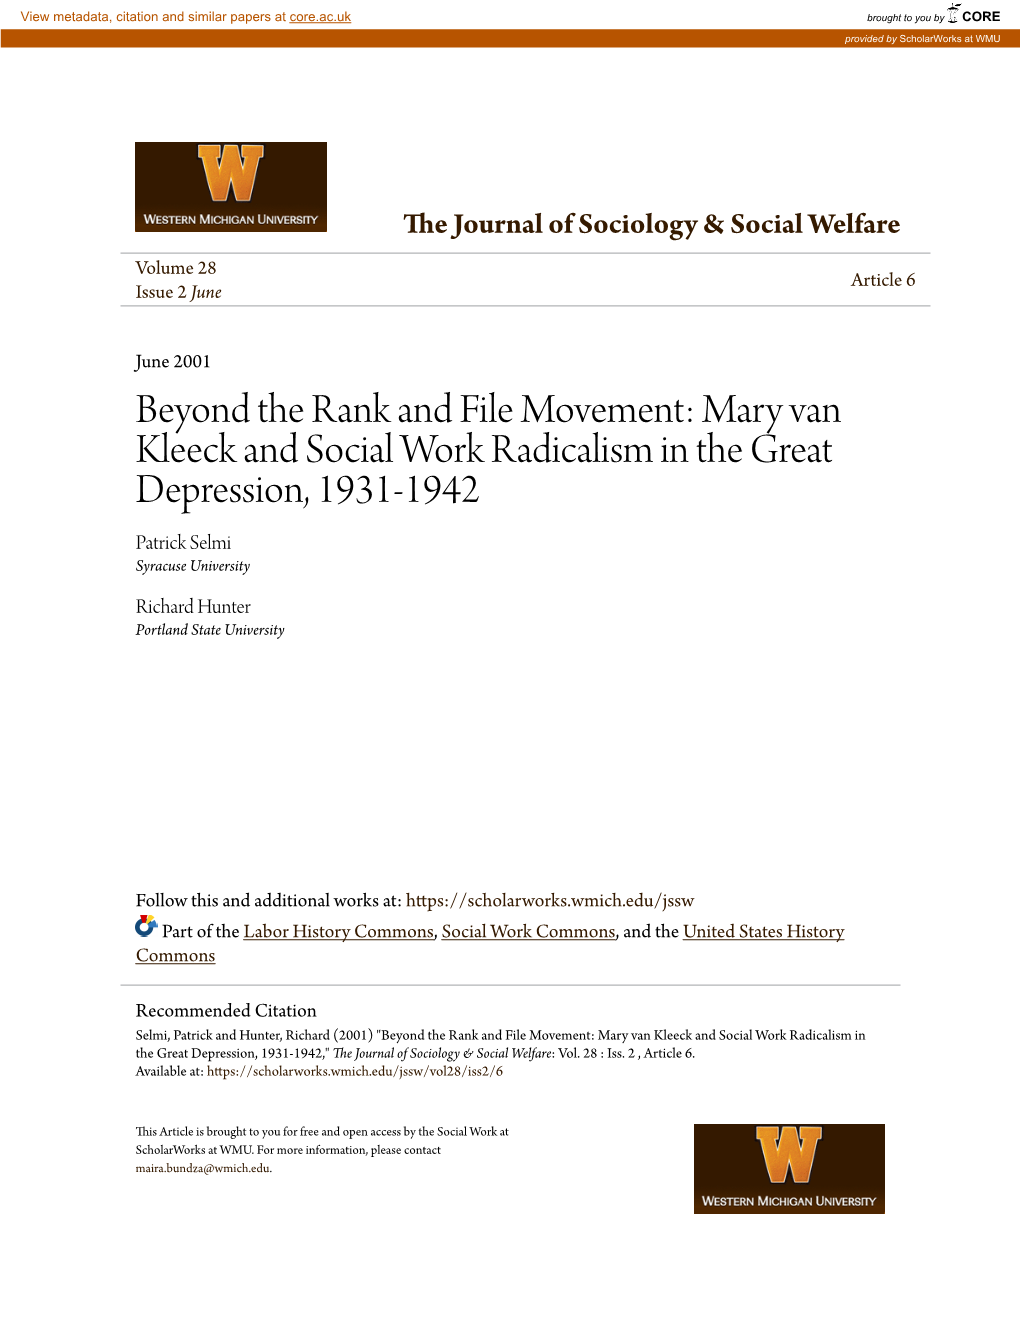 Mary Van Kleeck and Social Work Radicalism in the Great Depression, 1931-1942 Patrick Selmi Syracuse University